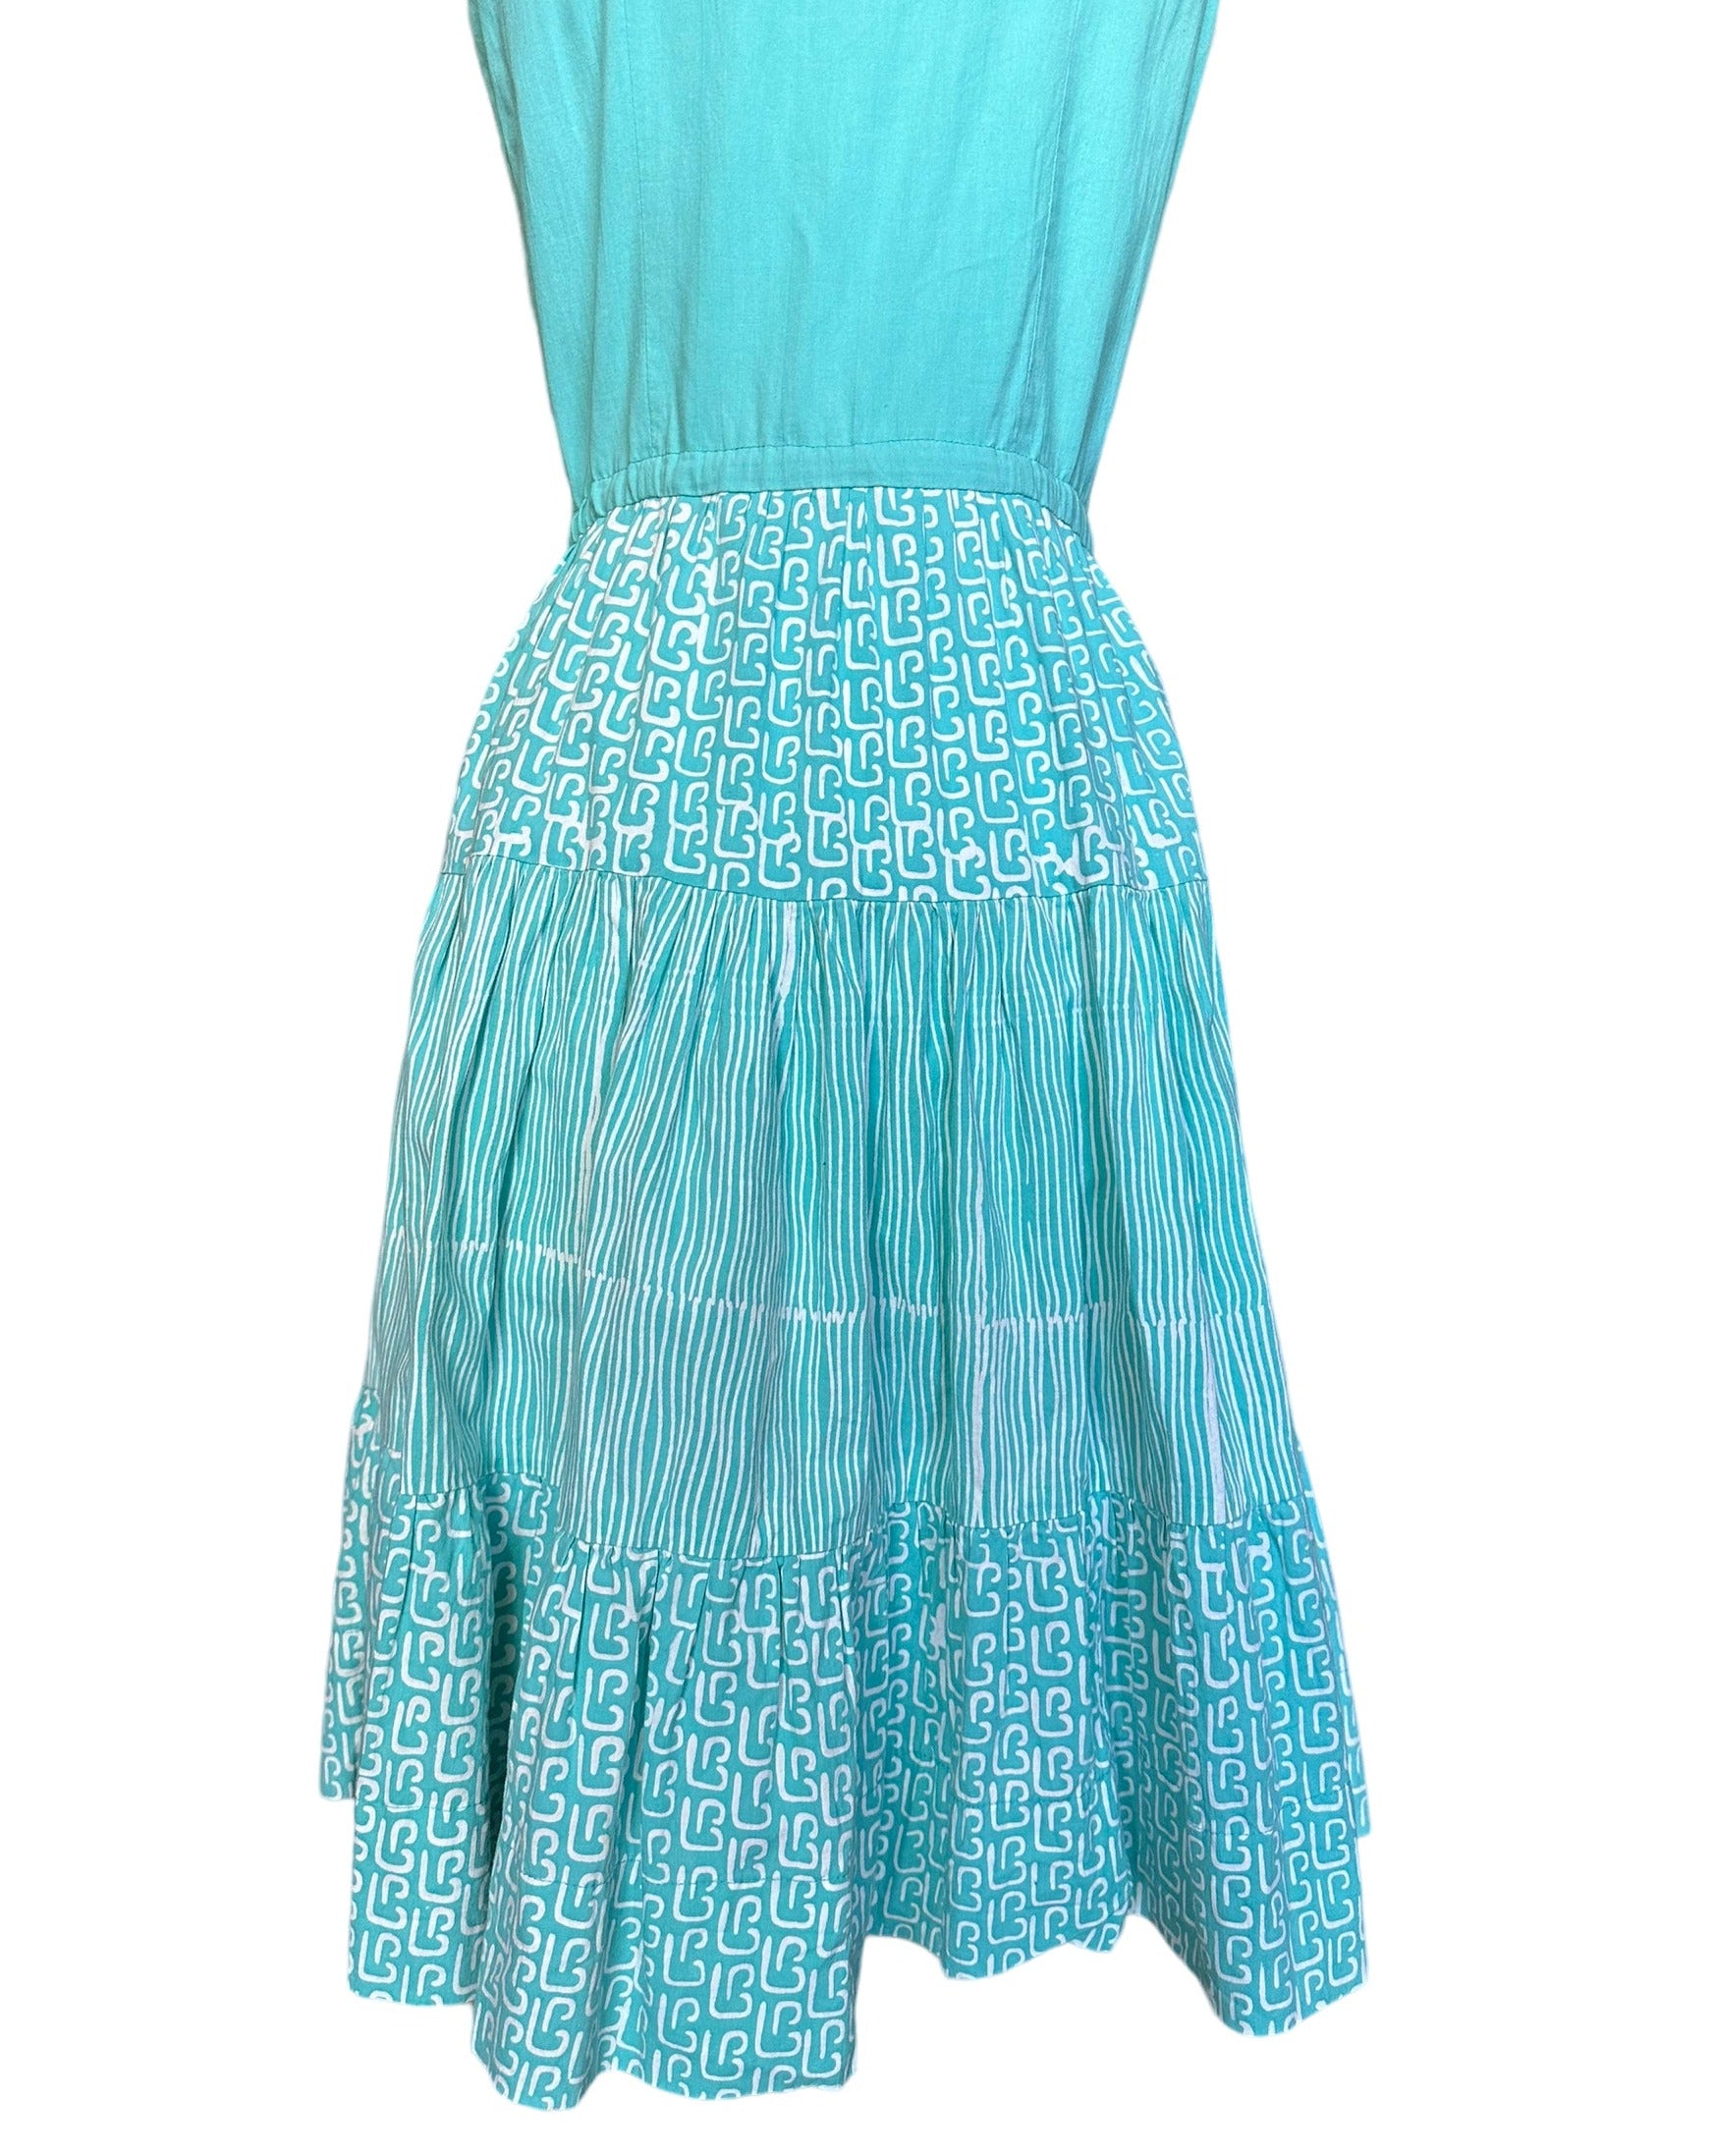 Back skirt view of Vintage 1950s Cute Summer Dress | Barn Owl Vintage | Seattle Summer Dresses